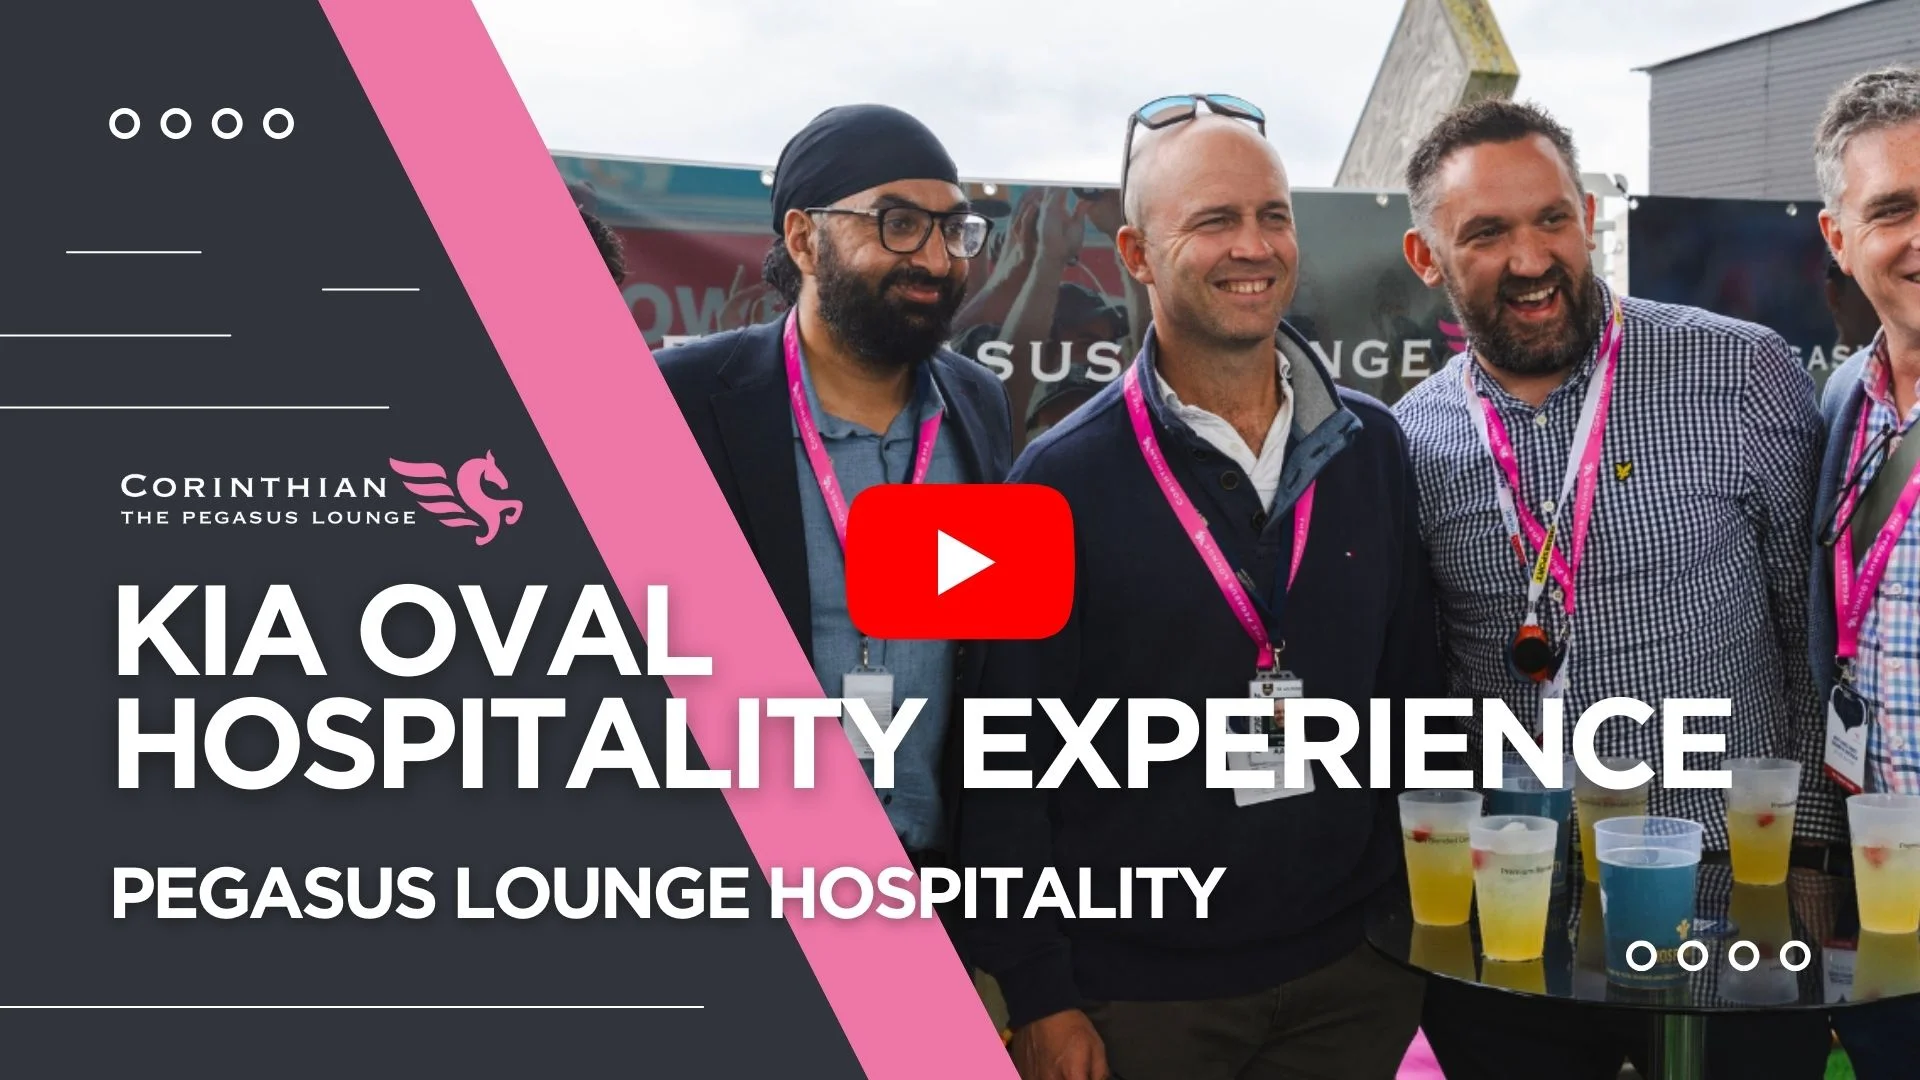 KIA Oval hospitality experience video with CorinthianSports